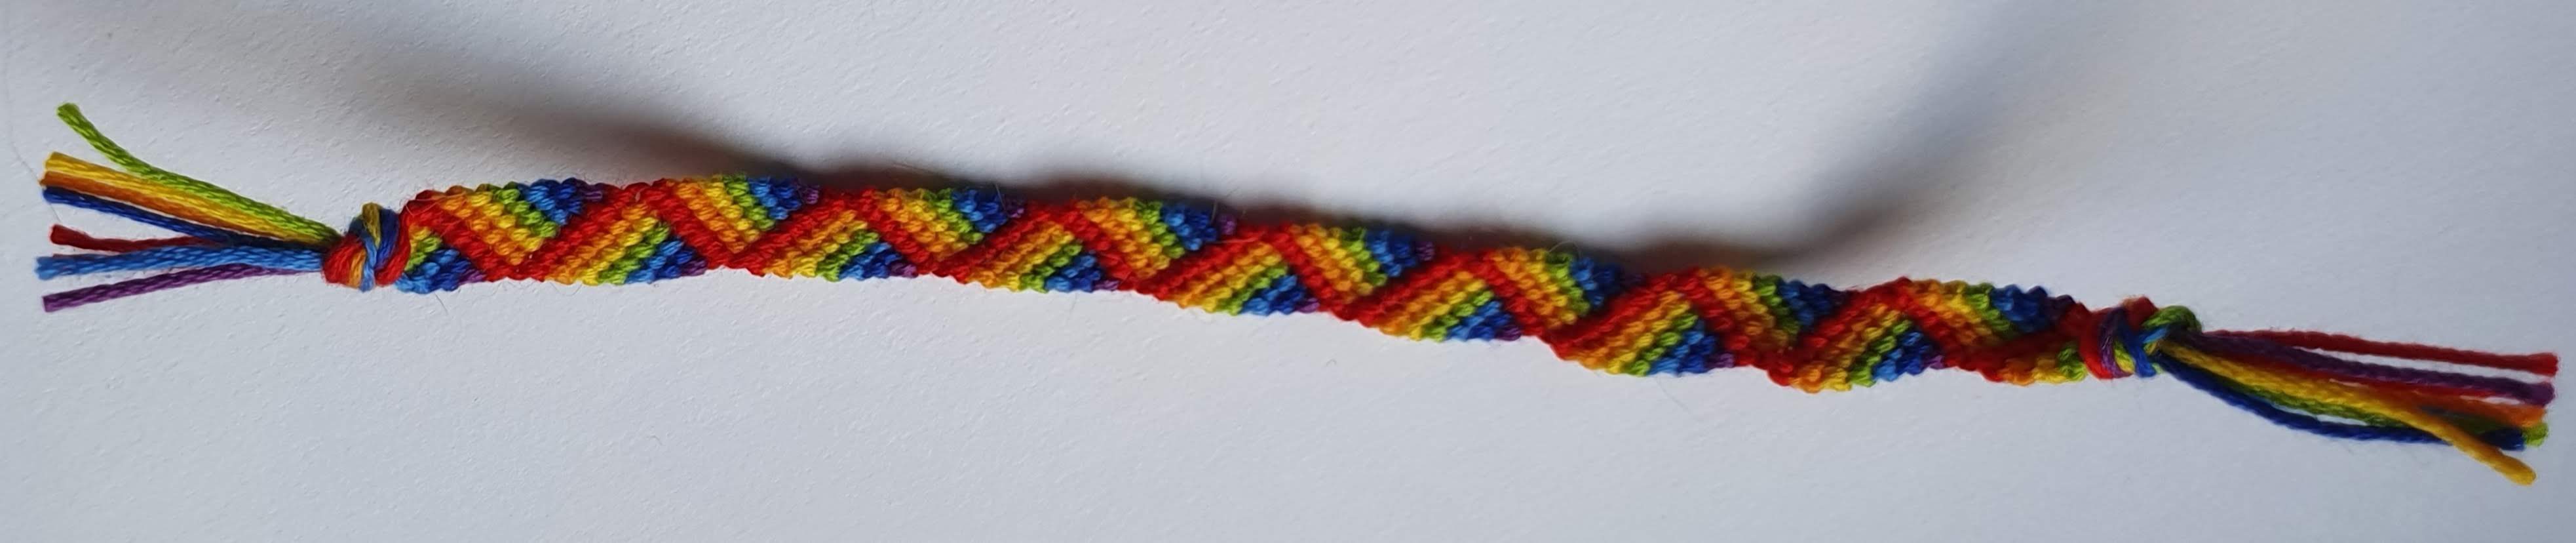 Bracelet with rainbow zigzags, looking like a folded ribbon